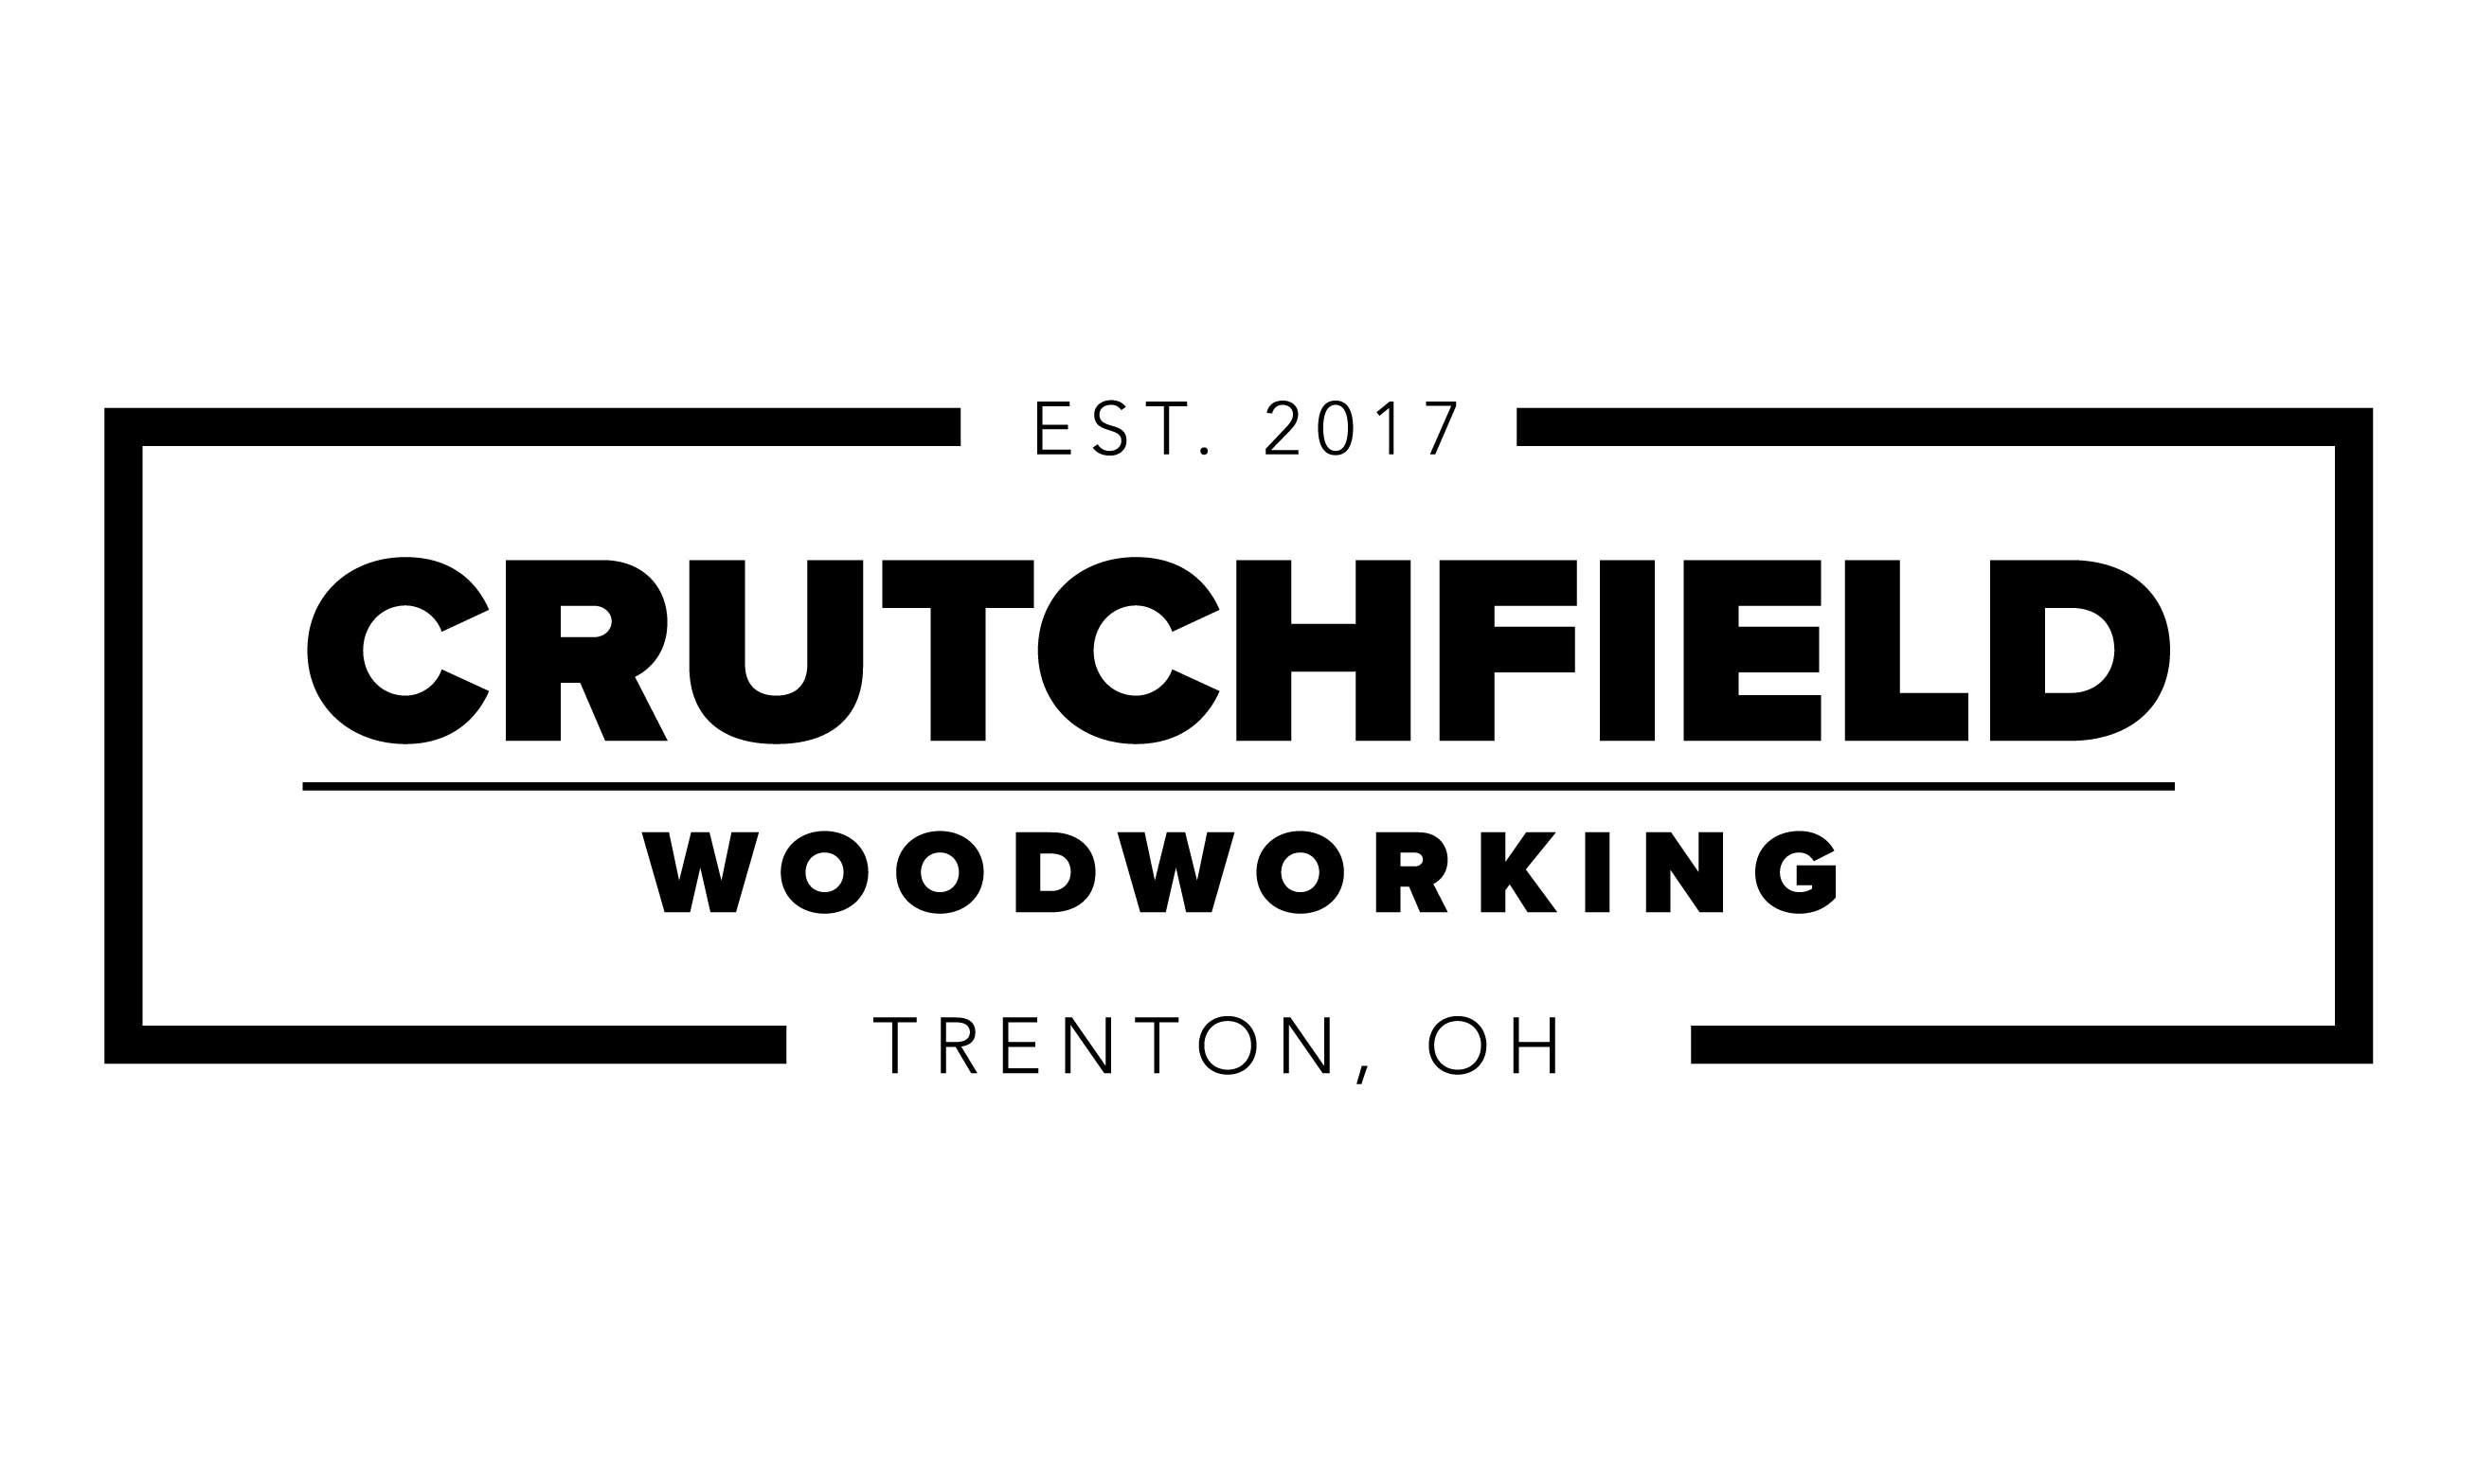 Crutchfield woodworking - Home improvement - 14 photos  Facebook Logo